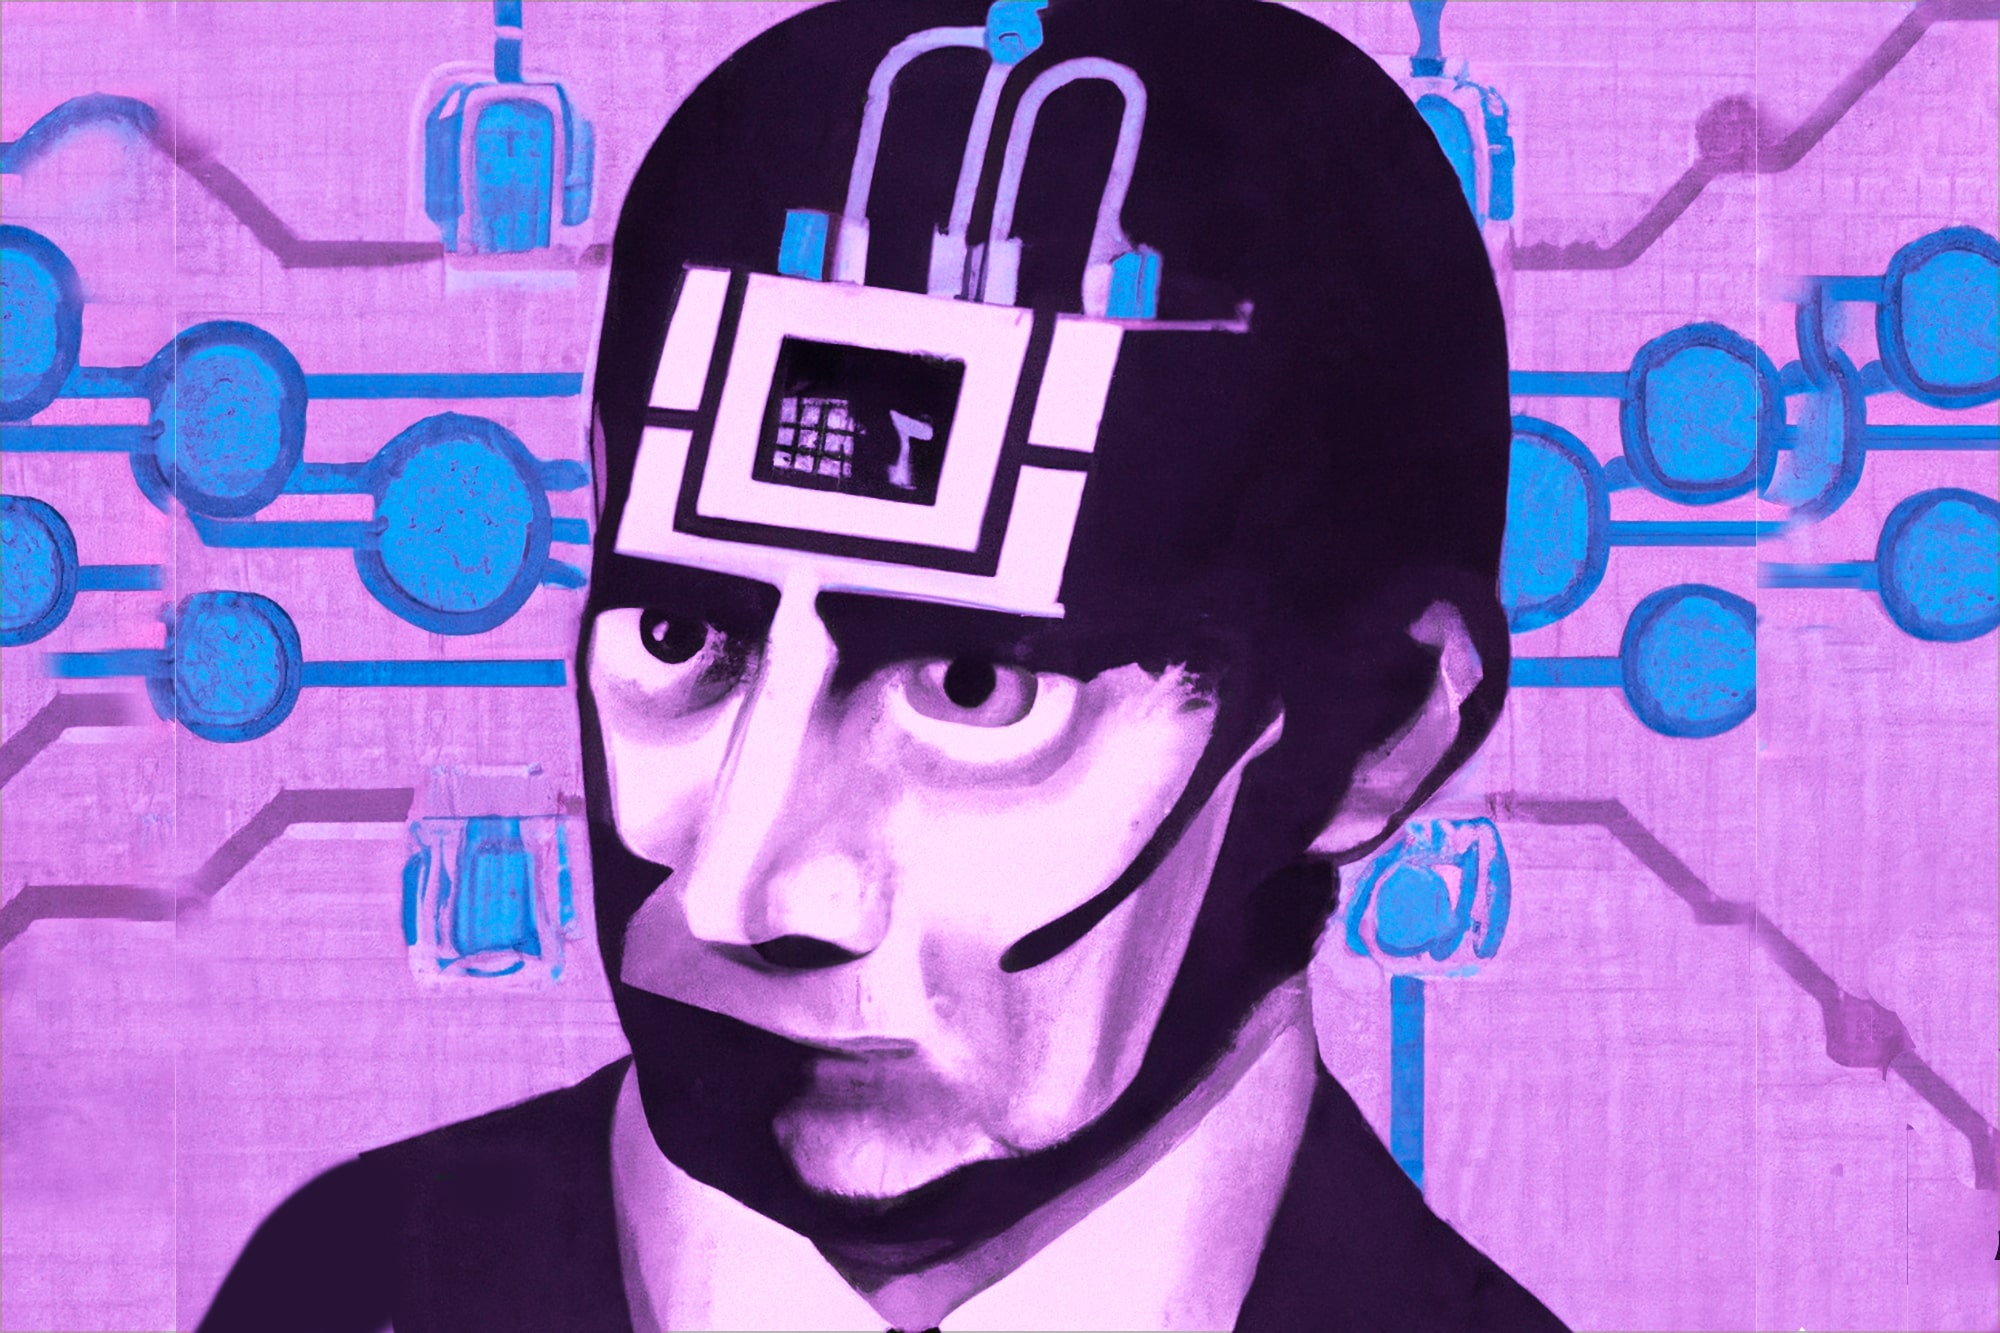 Una creación de Dall-E de un póster de película de la década de 1960 si un hombre con un cerebro de computadora.